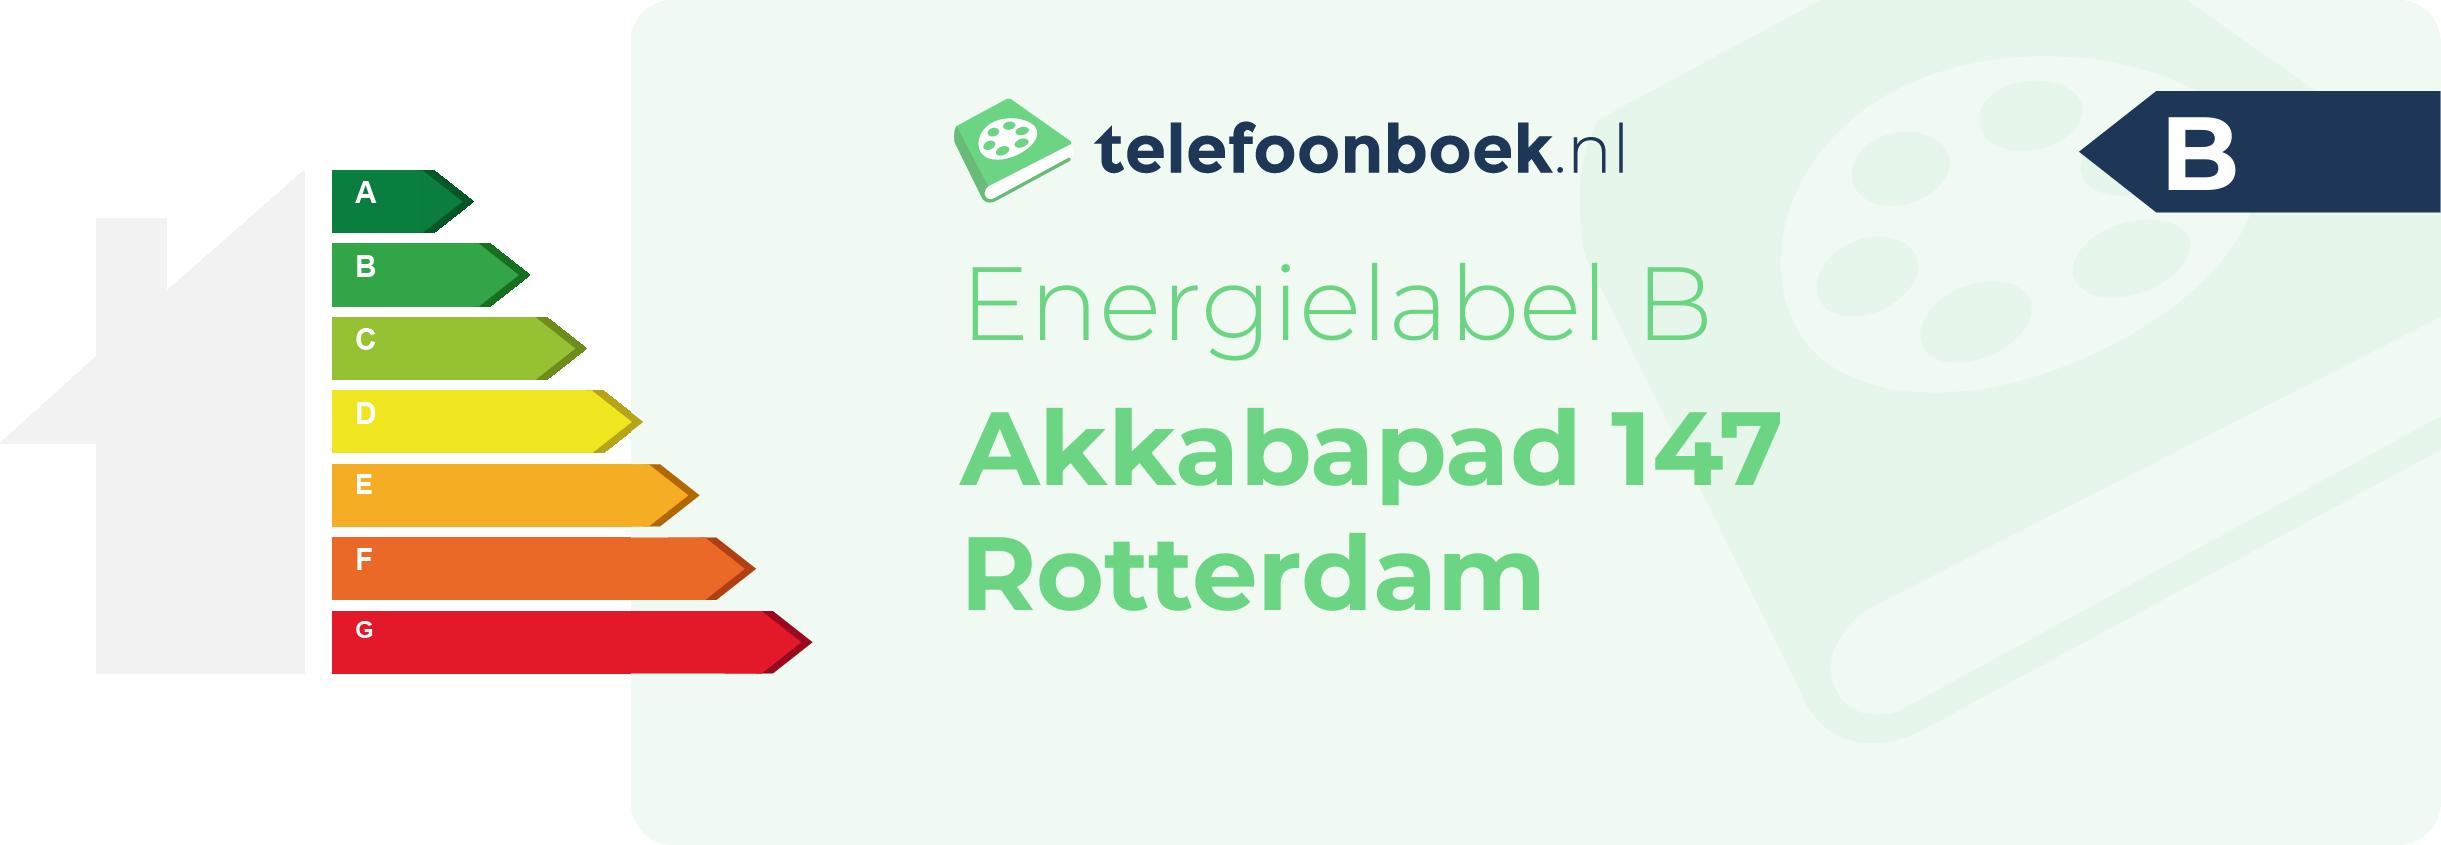 Energielabel Akkabapad 147 Rotterdam